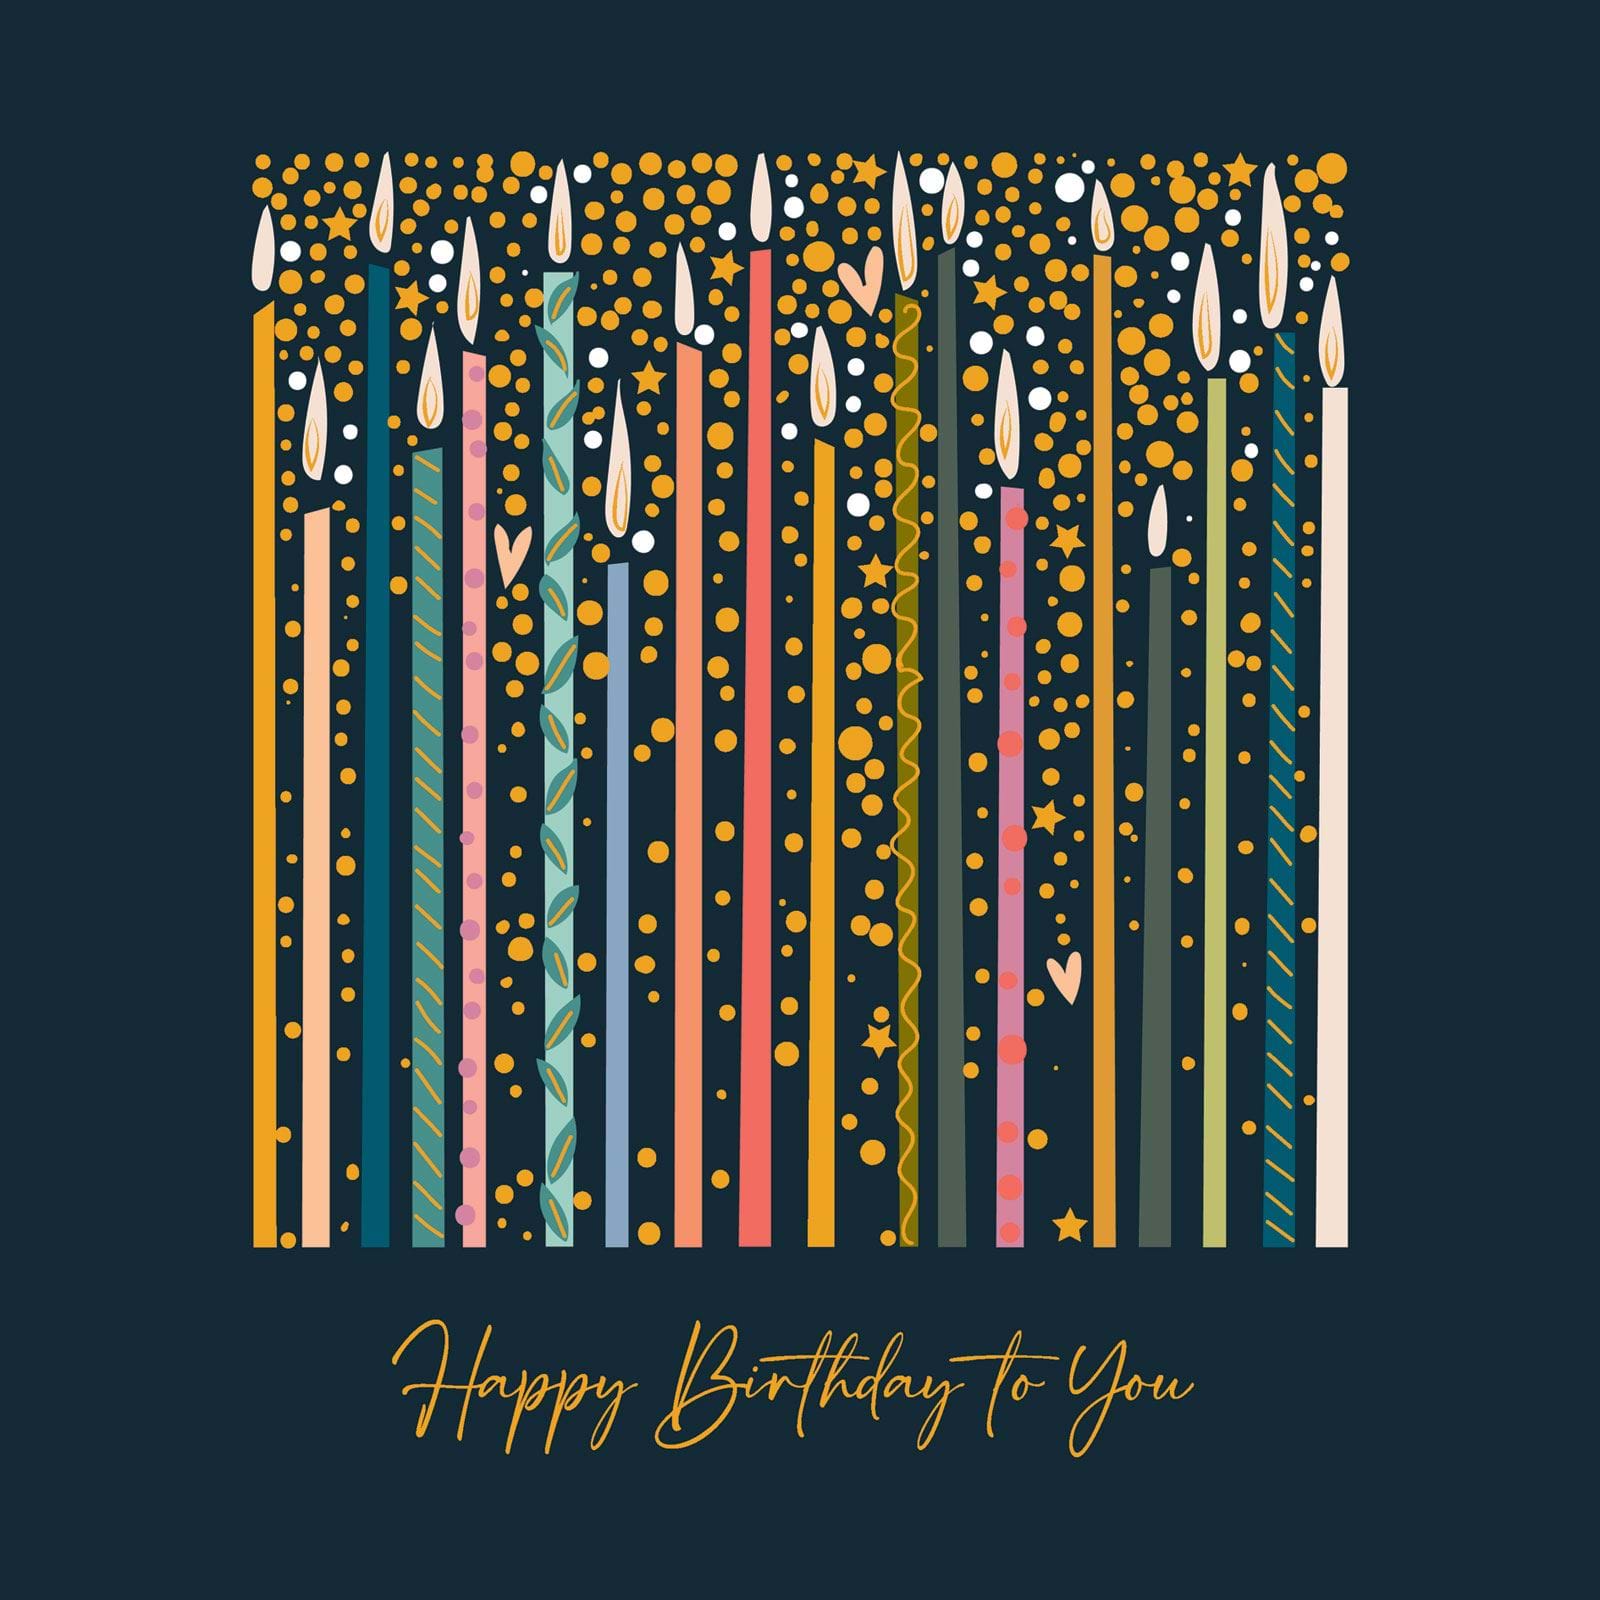 Tall Candles Birthday Card